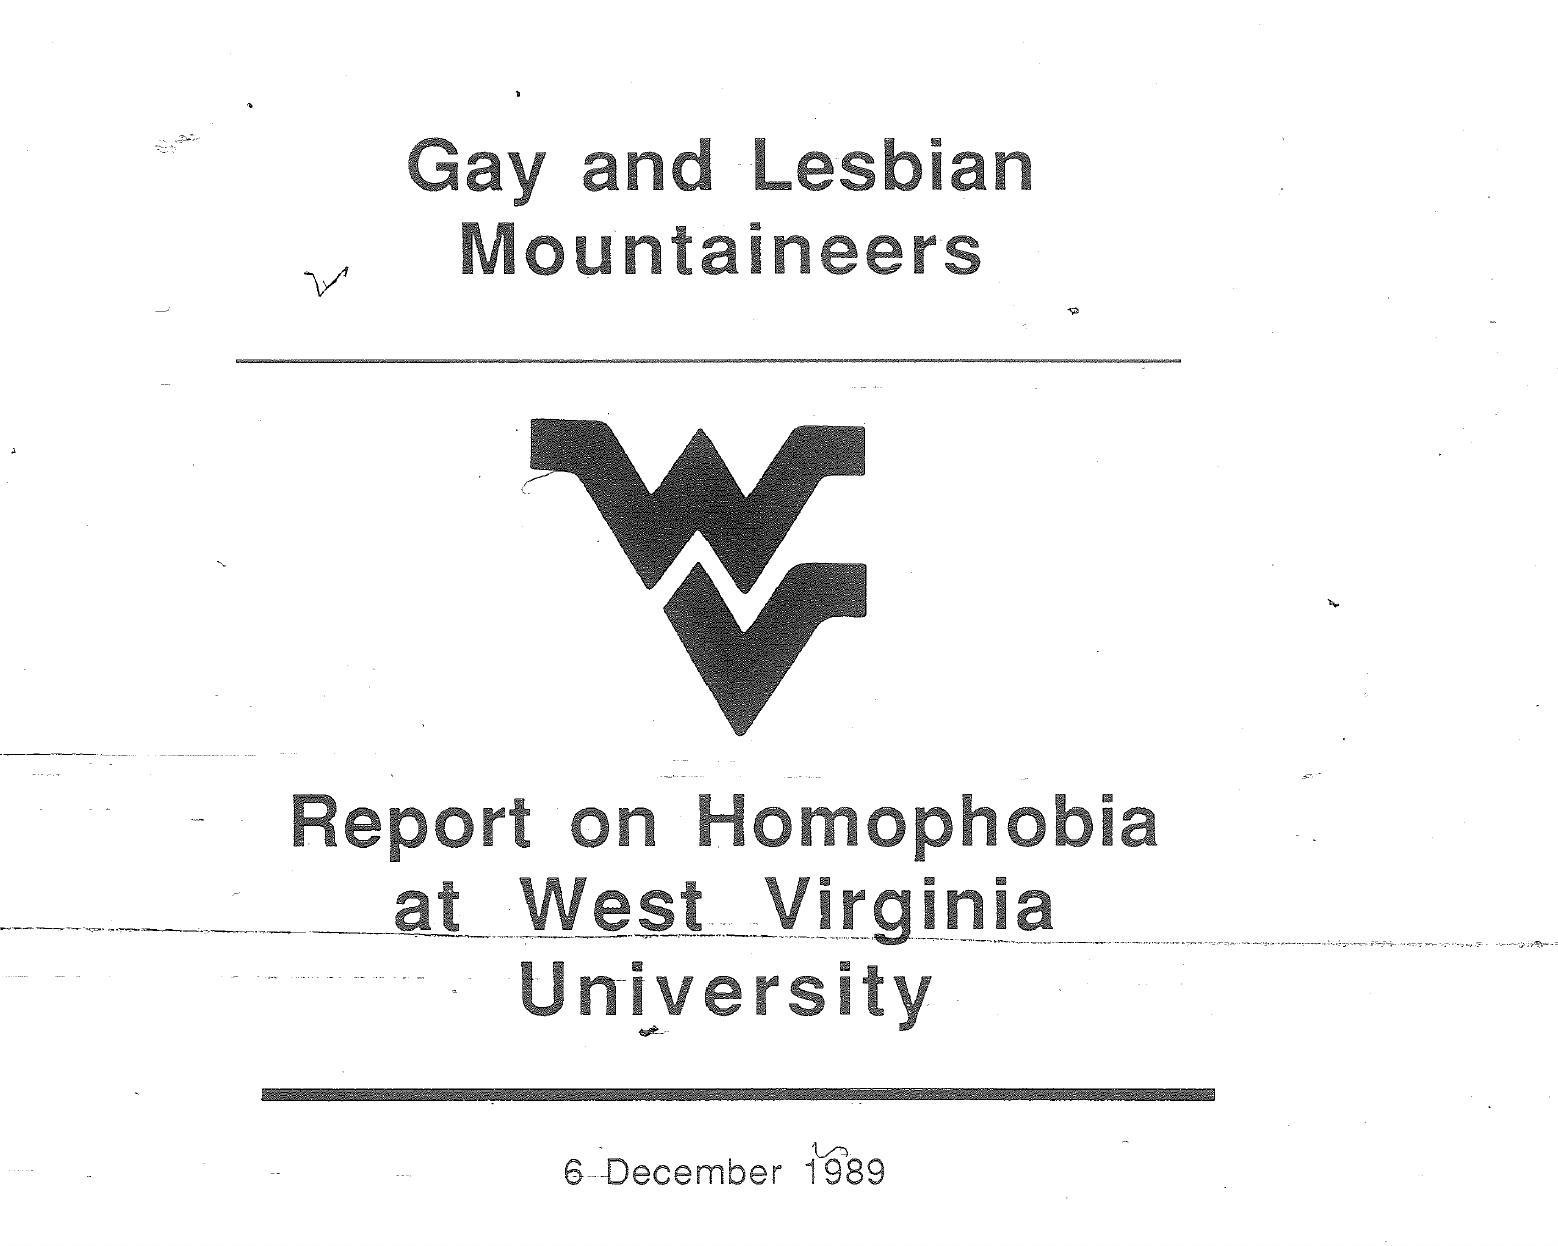 Homophobia at West Virginia University, 1989 — Adventures in Censorship